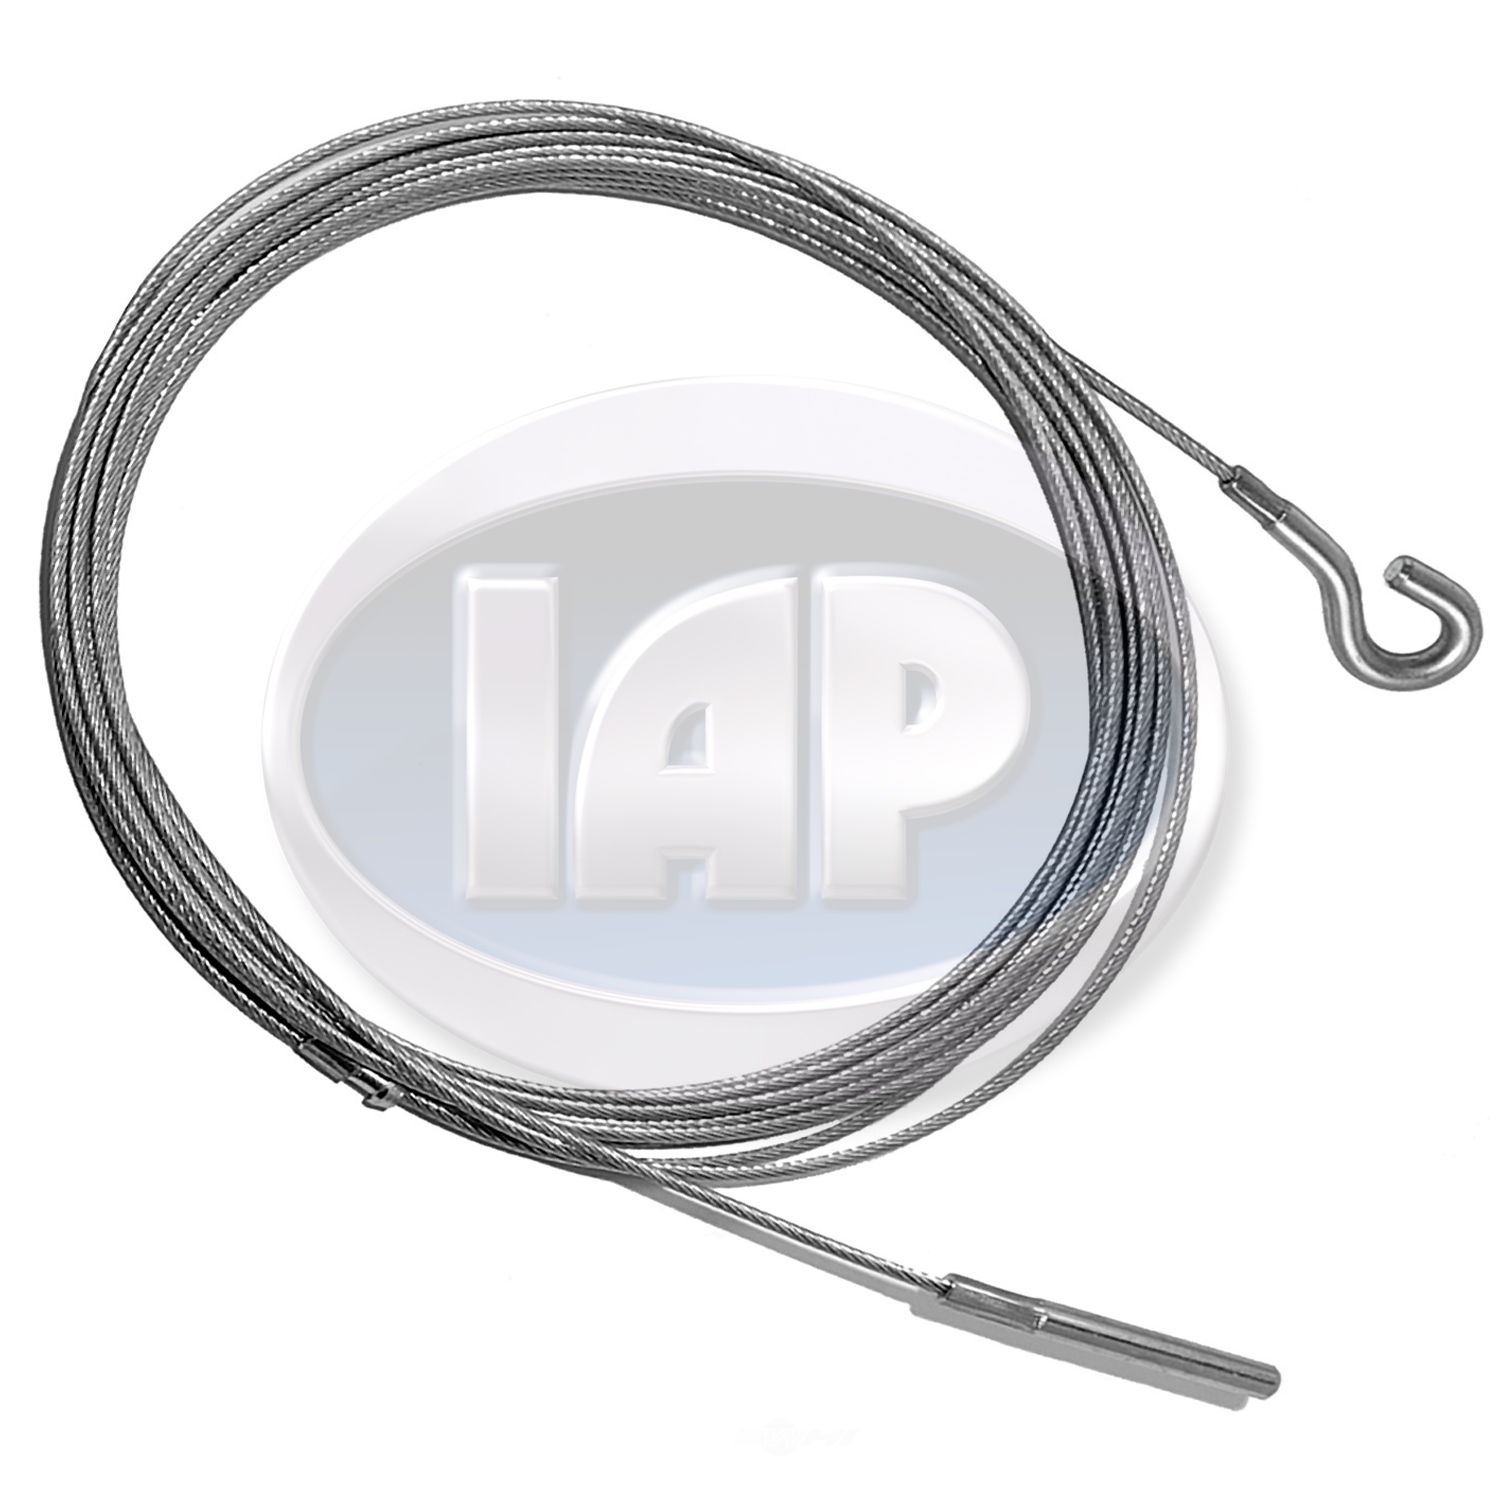 IAP/KUHLTEK MOTORWERKS - Carburetor Accelerator Cable - KMS 211721555G